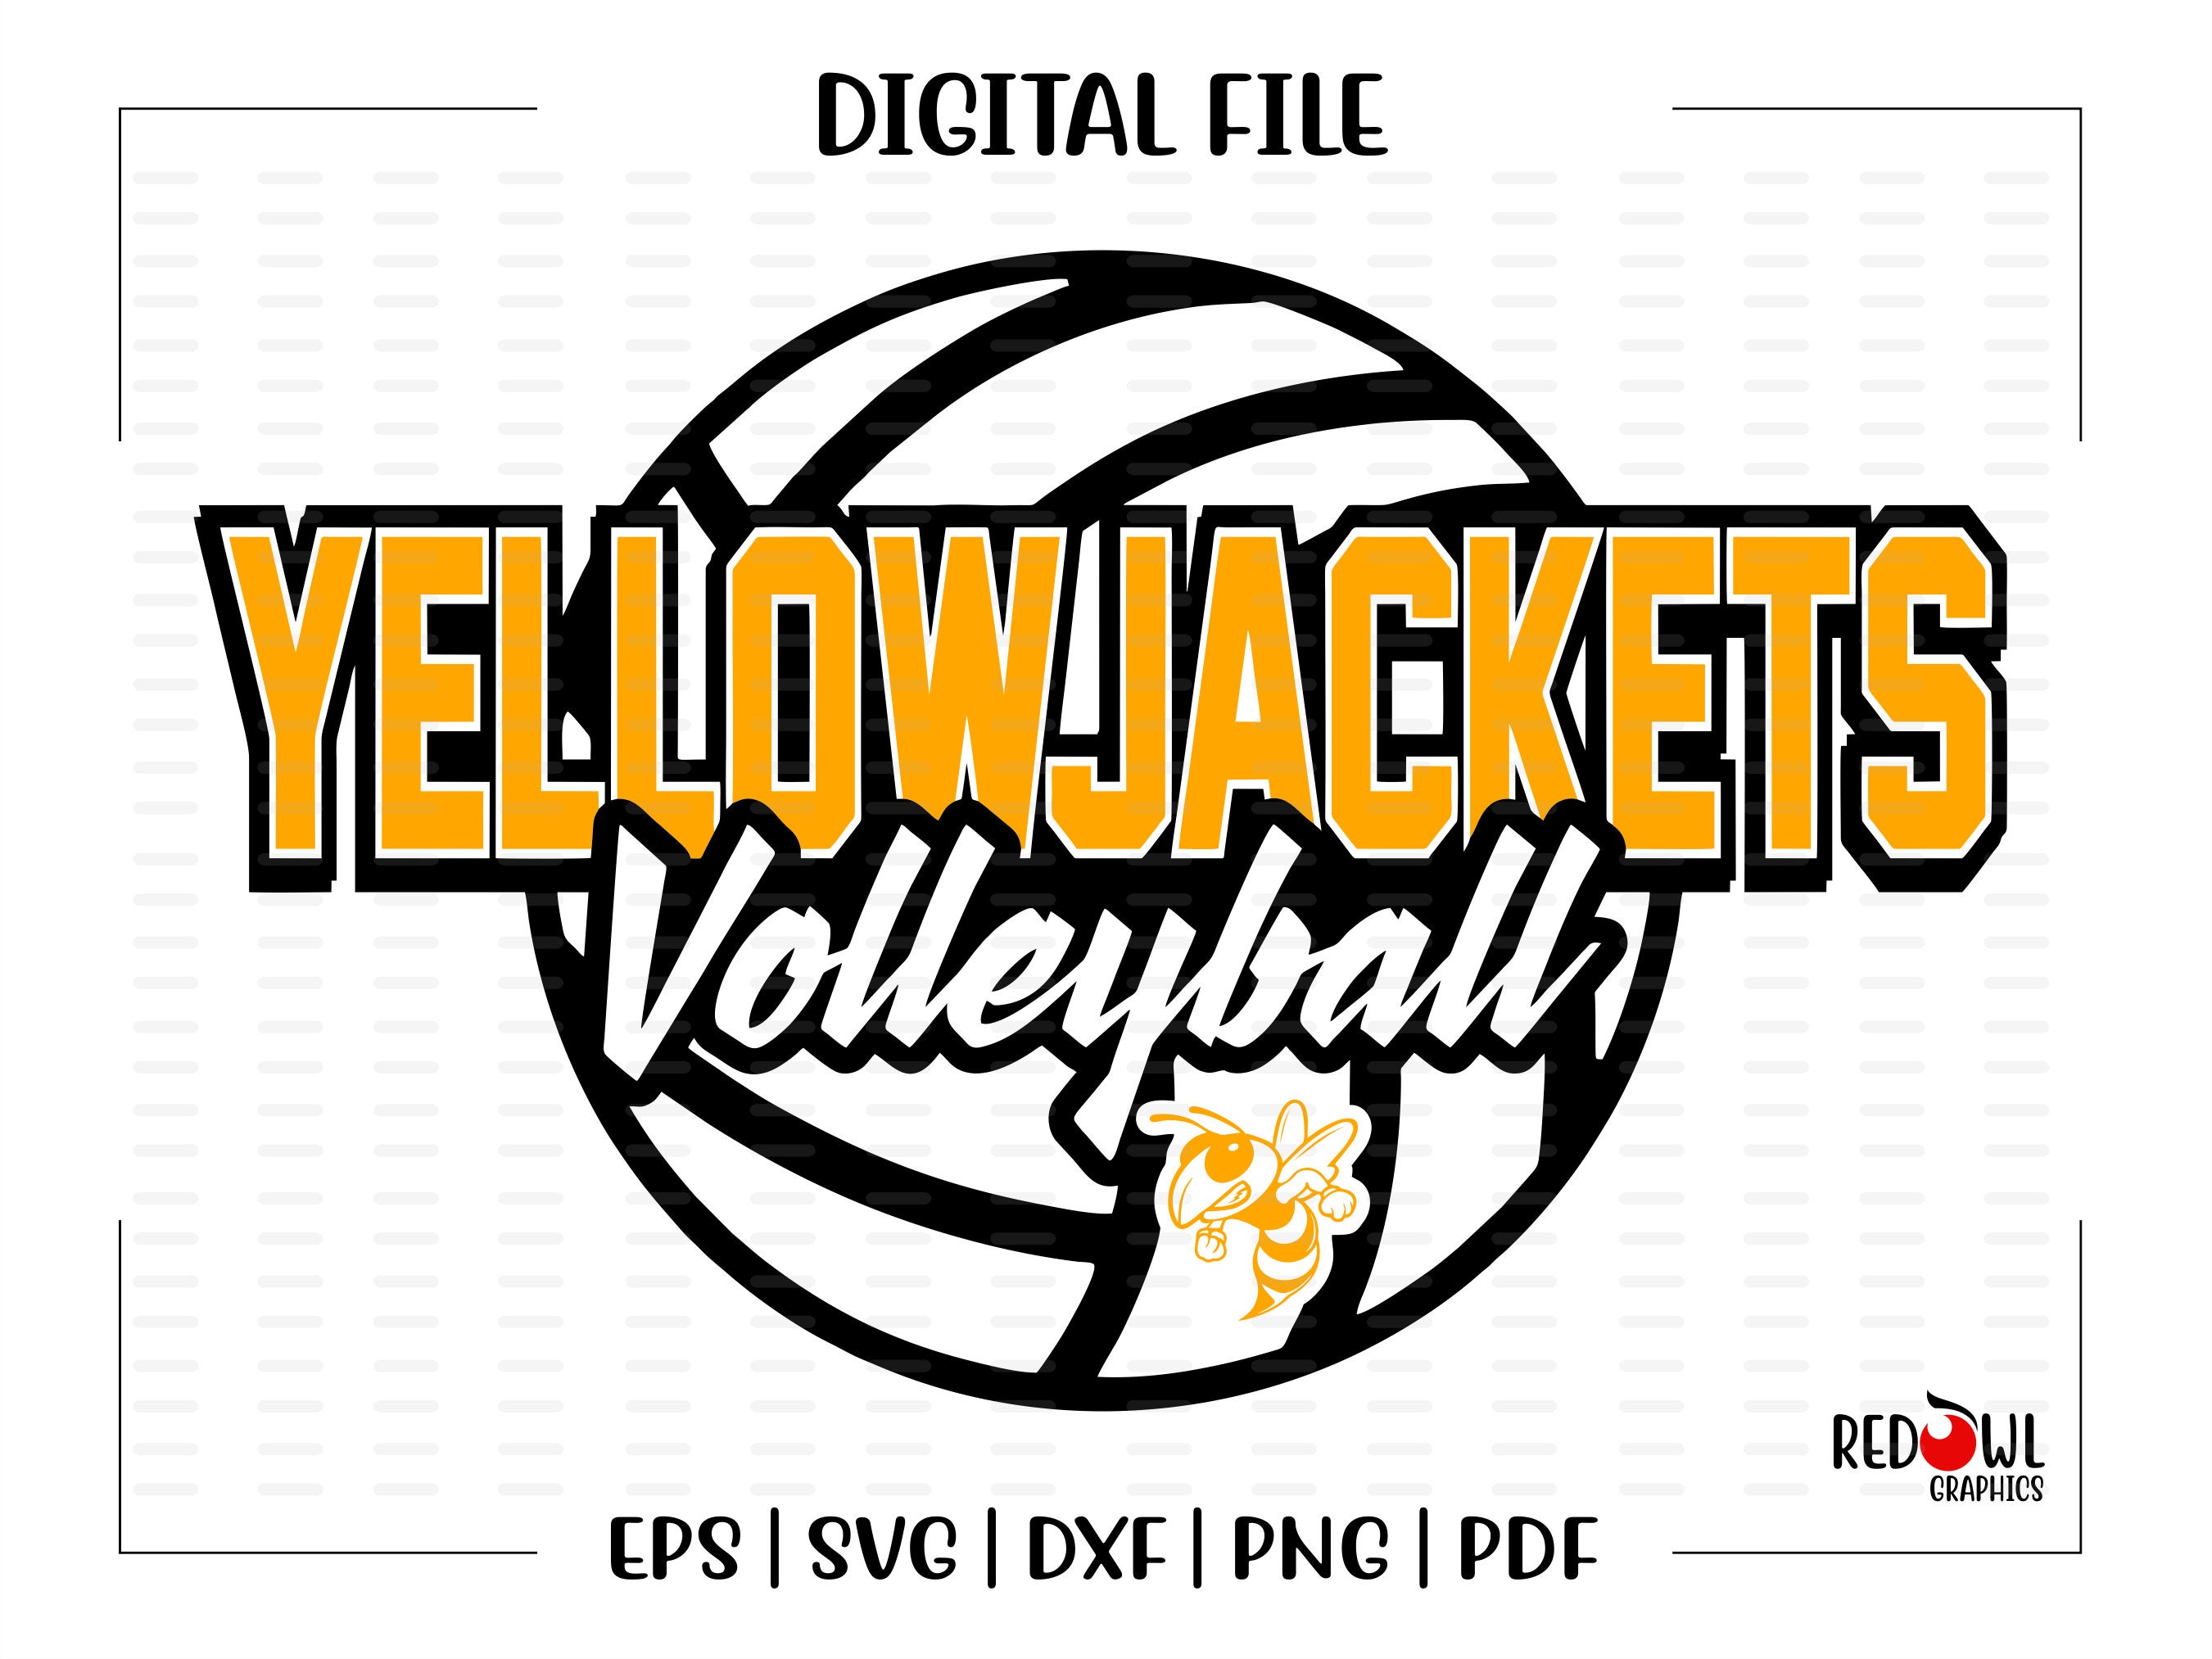 Yellowjackets Volleyball Design